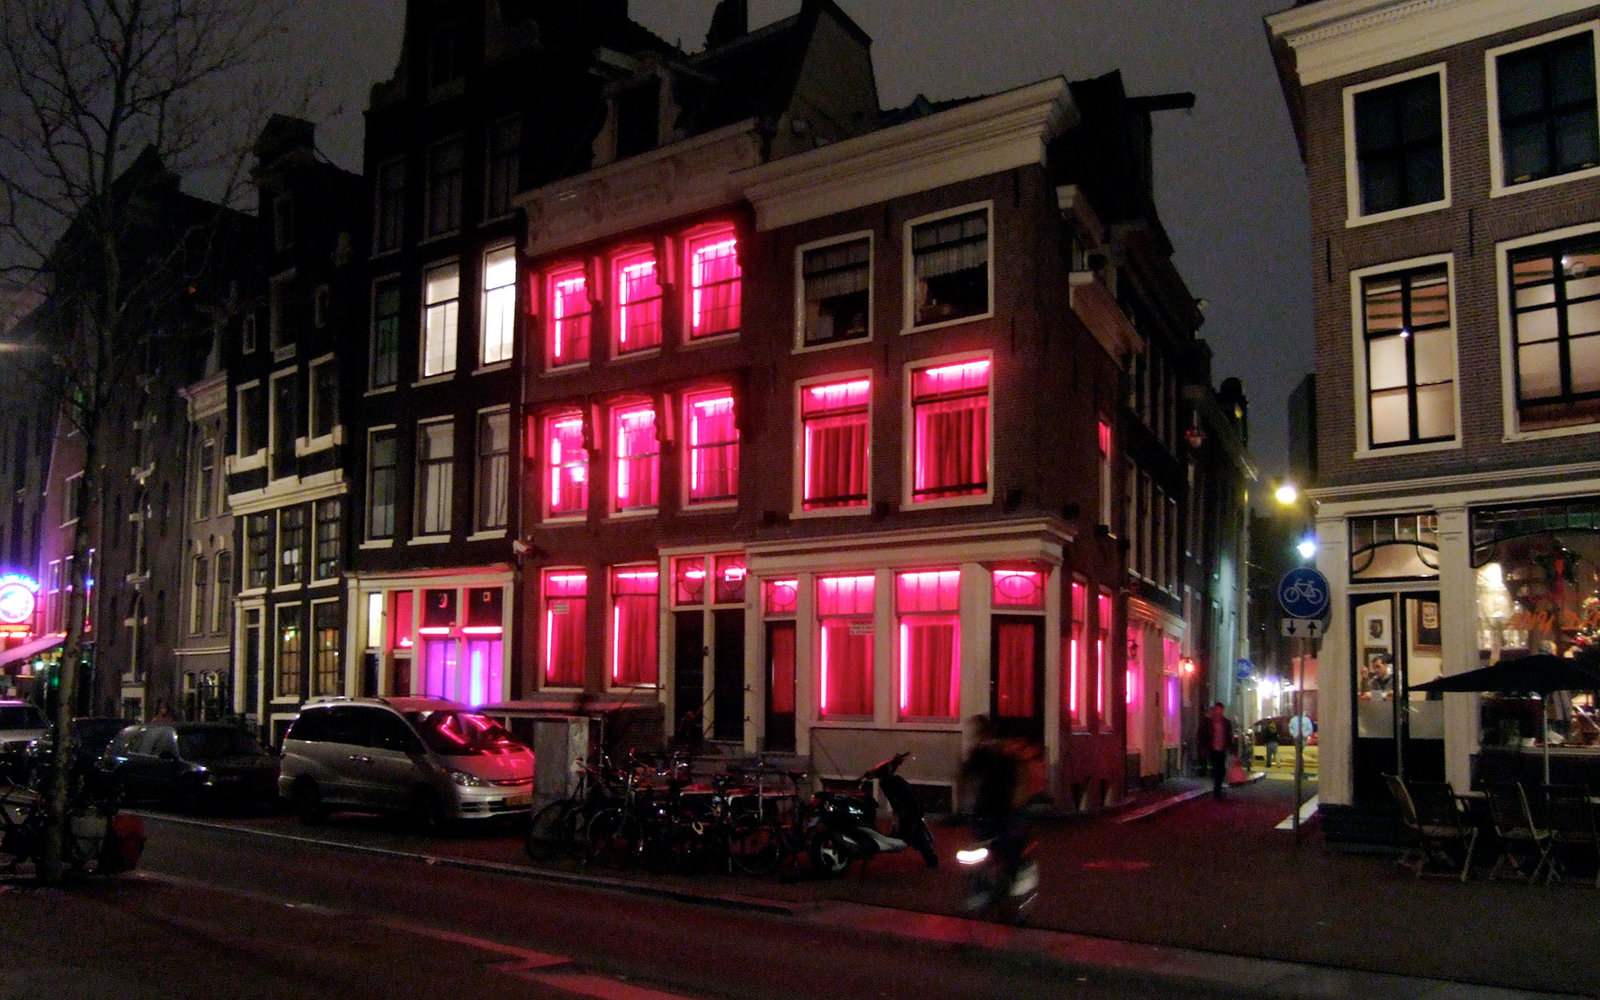 Amsterdam red light